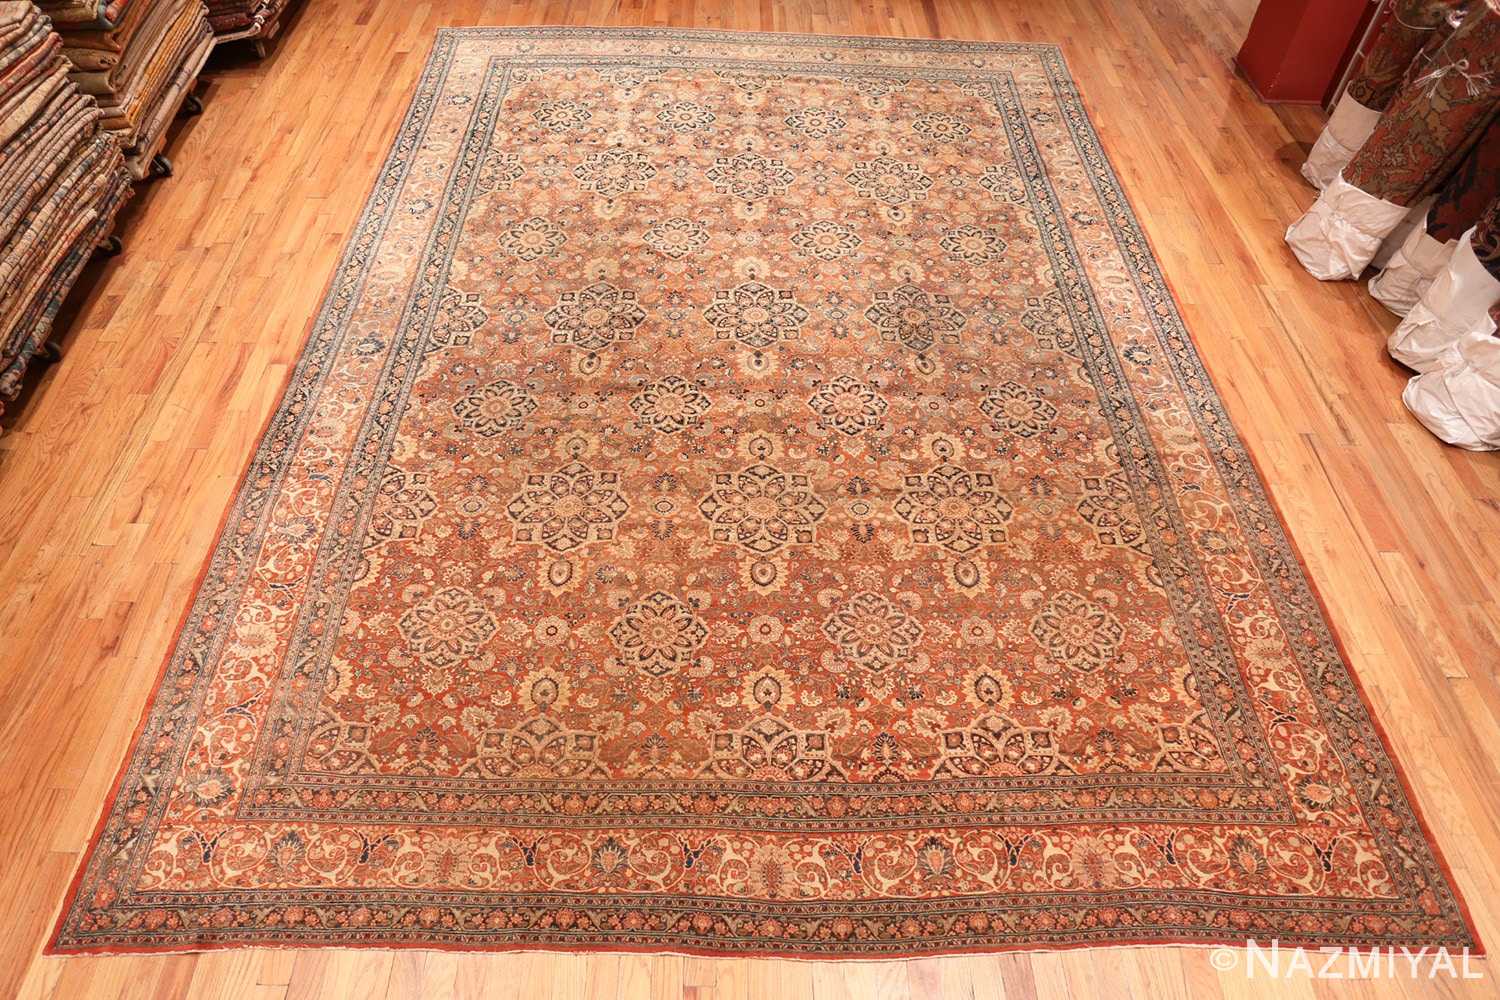 Full antique Persian Tabriz rug 50657 by Nazmiyal